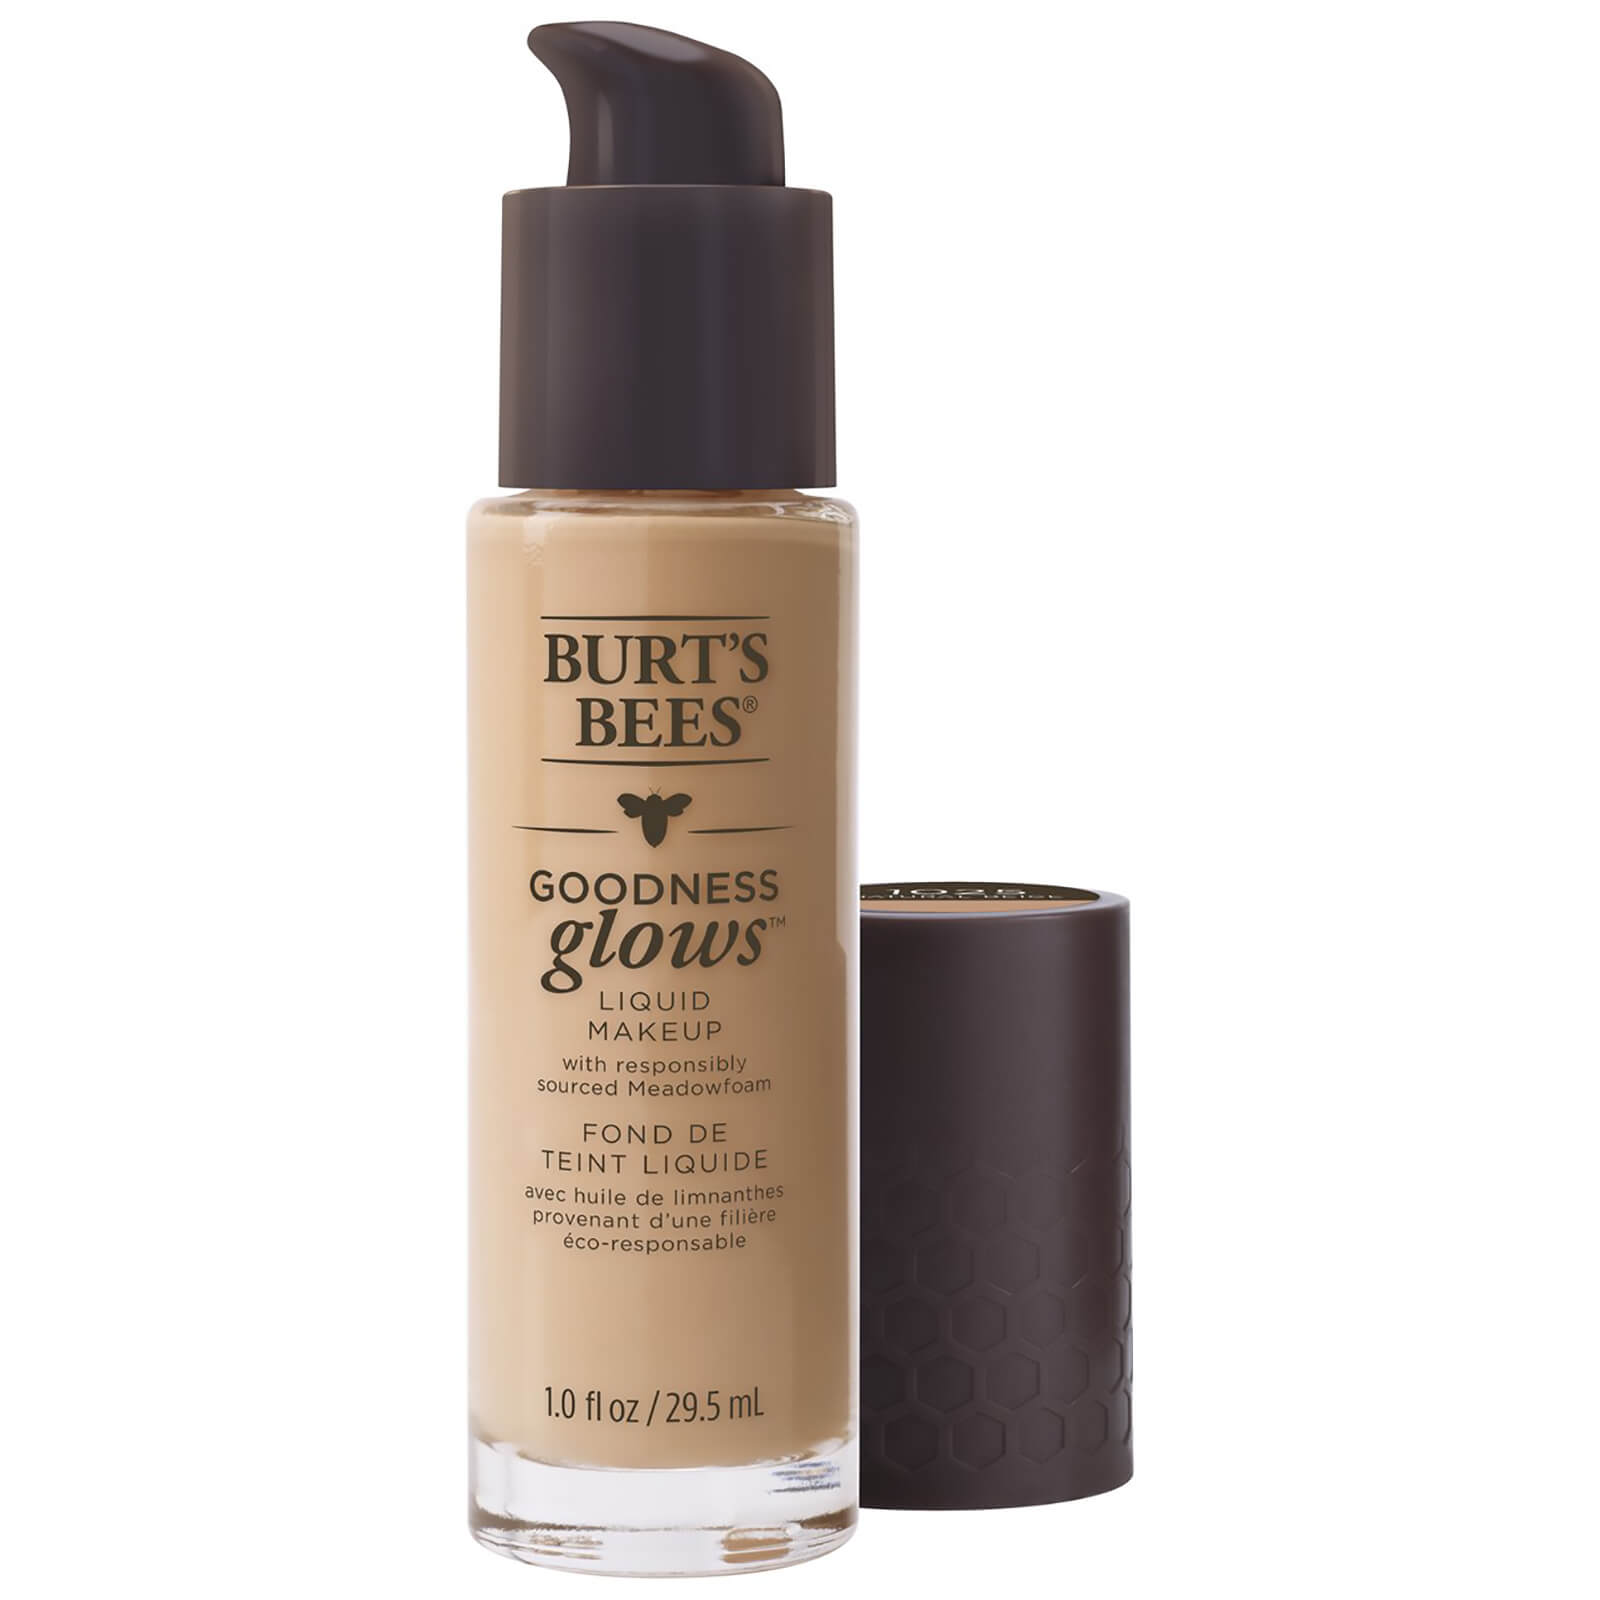 Burt's Bees Goodness Glows Liquid Foundation 29.5ml (Various Shades) - Natural Beige